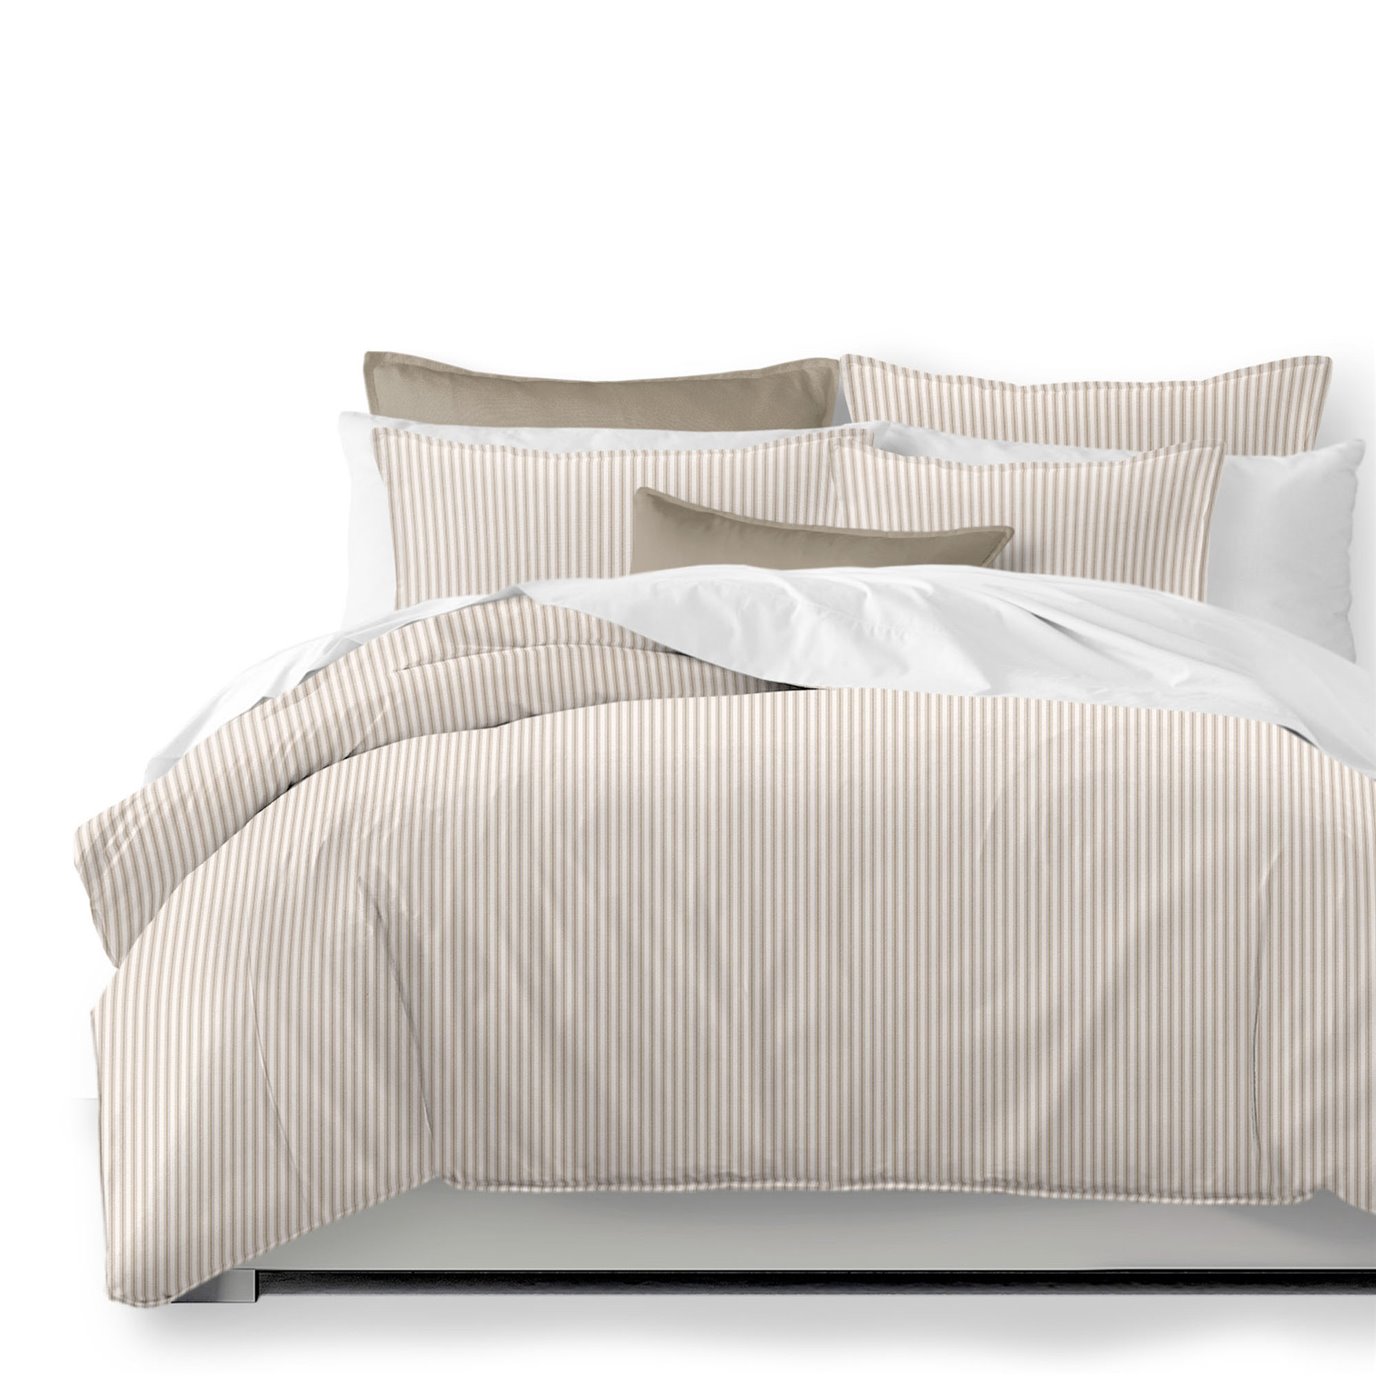 Cruz Ticking Stripes Taupe/Ivory Comforter and Pillow Sham(s) Set - Size Super King